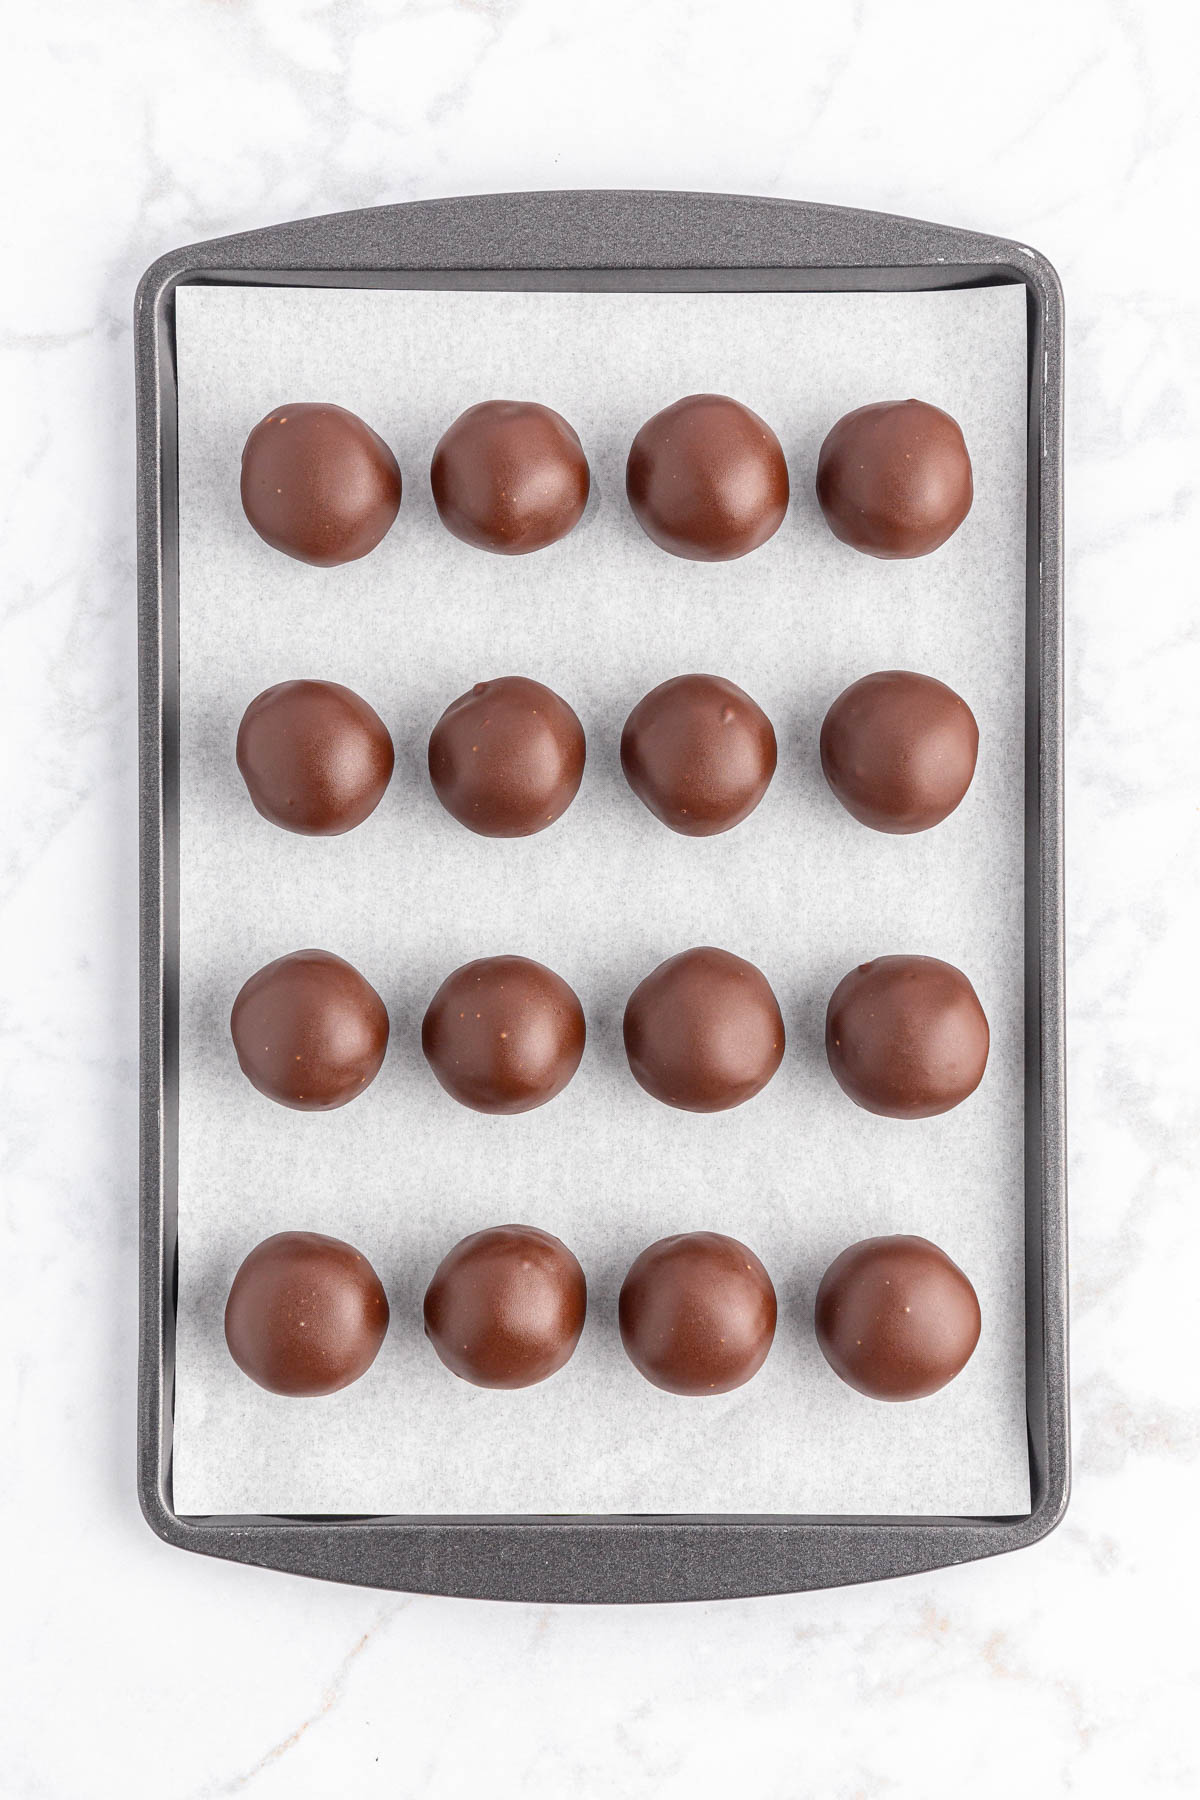 Chocolate peanut butter balls on baking sheet